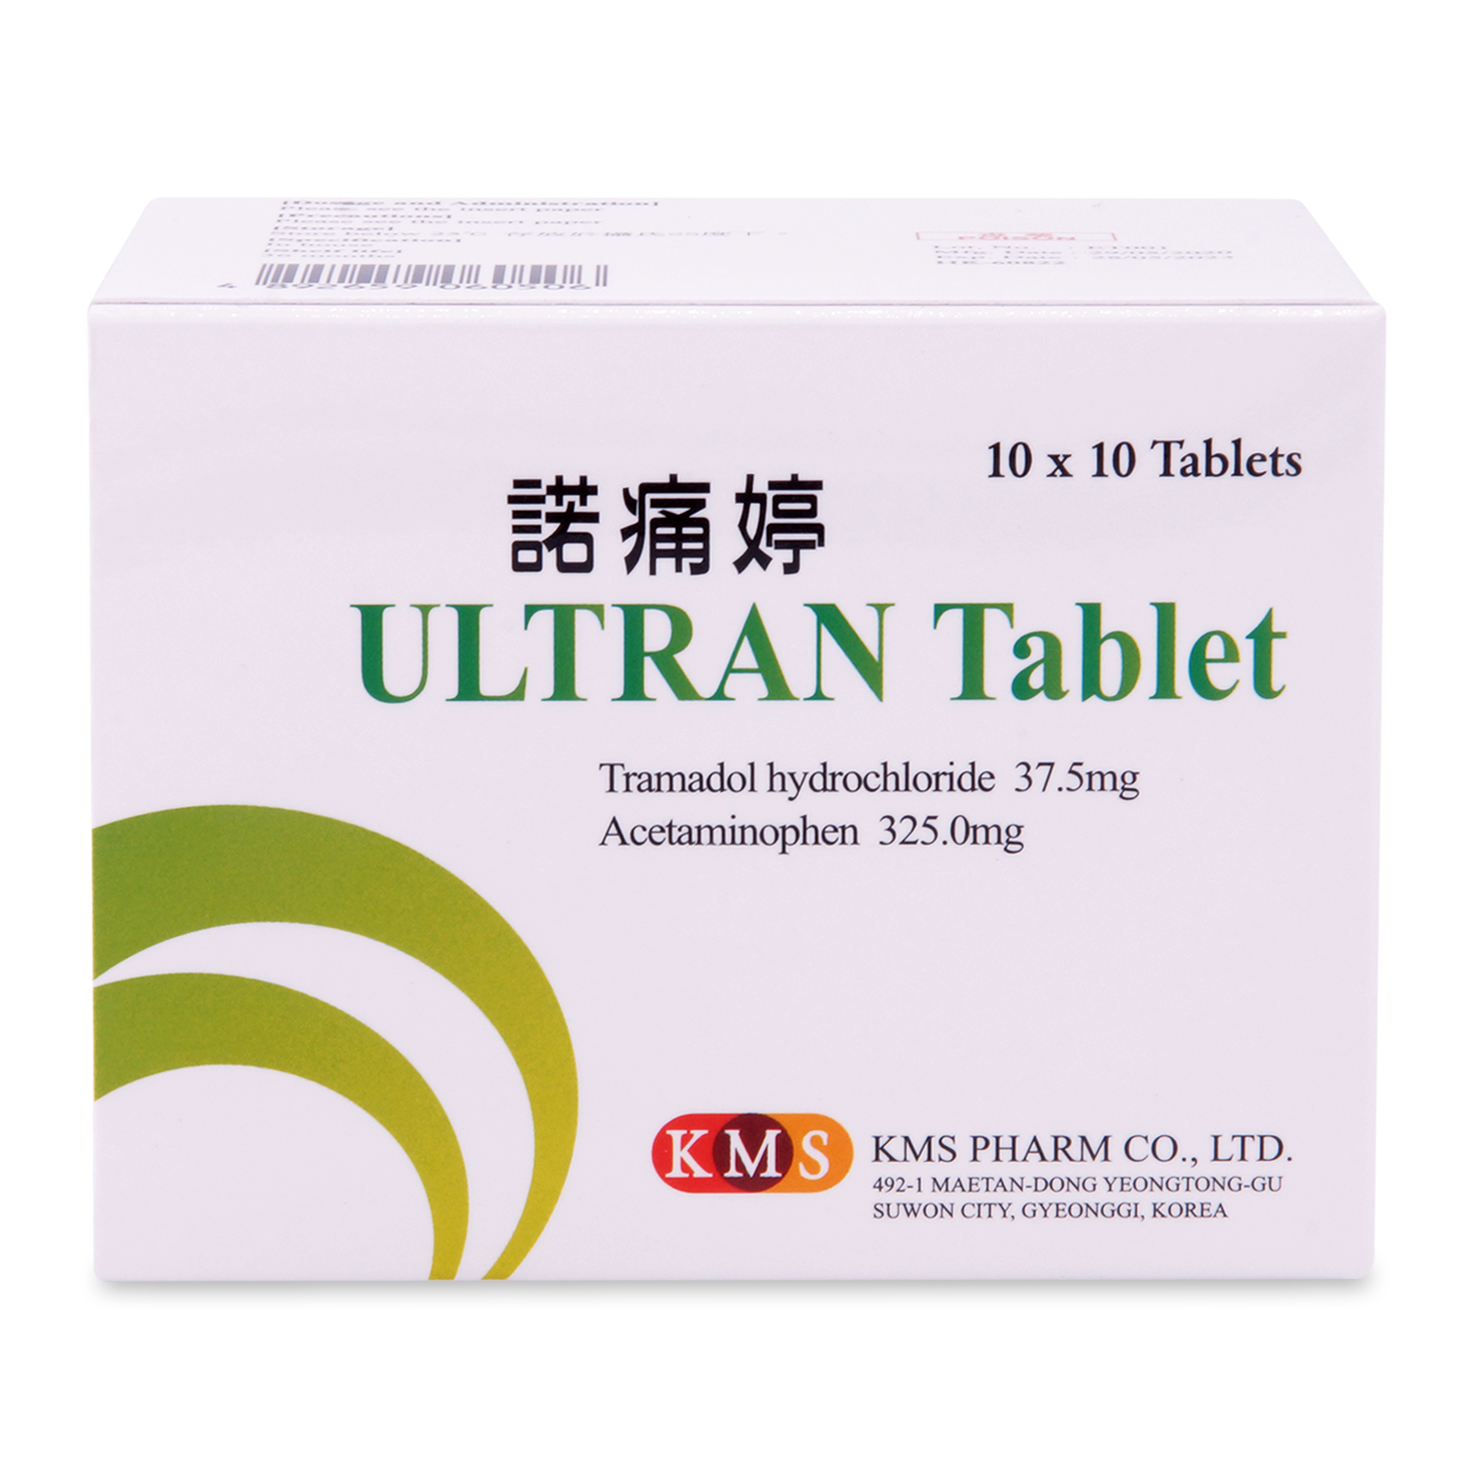 諾痛婷 ULTRAN TABLETS 10's x 10 B/P (P1S1S3) (Paracetamol 325mg + Tramadol 37.6mg)